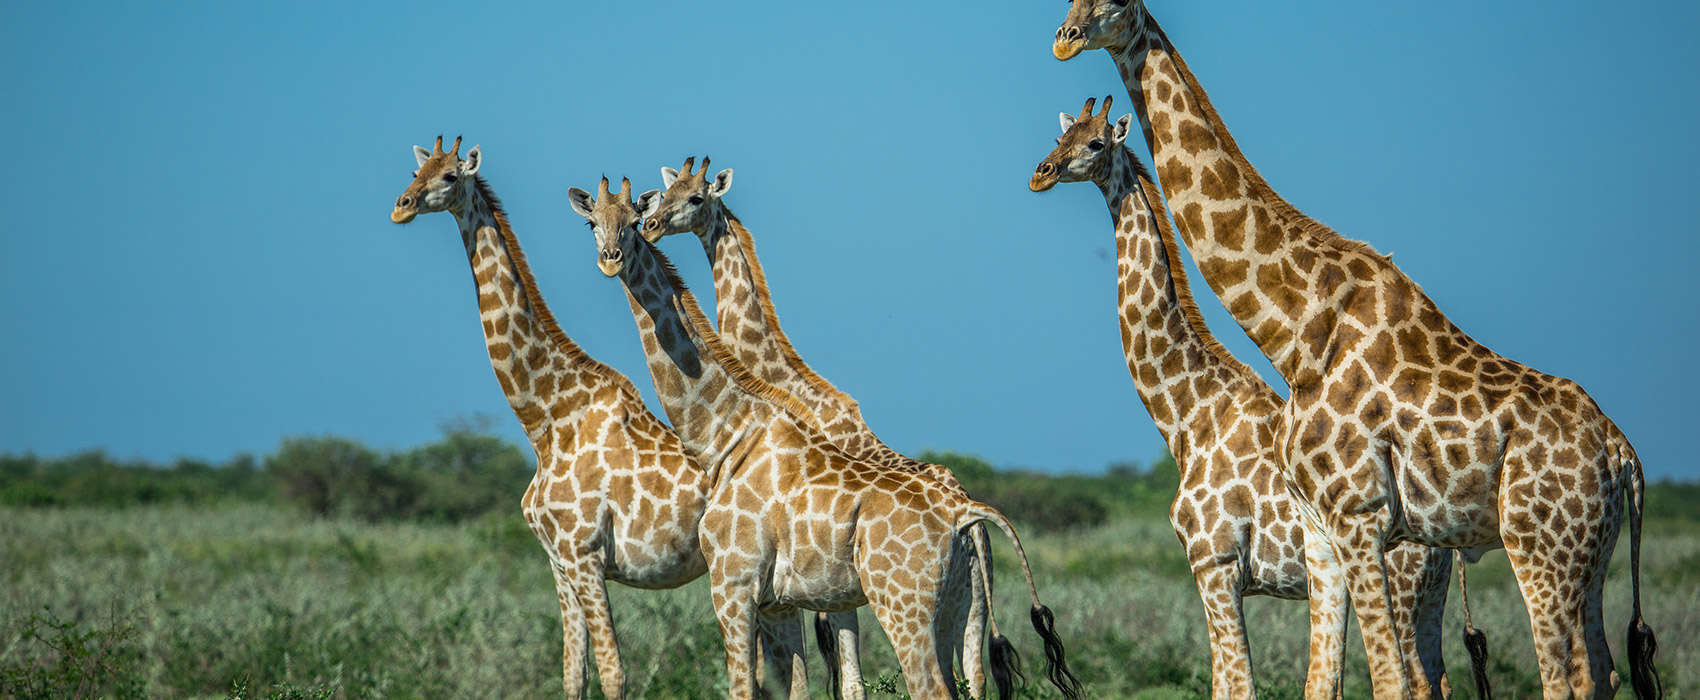 African Makgadikgadian and Nxai Pans Safari giraffe